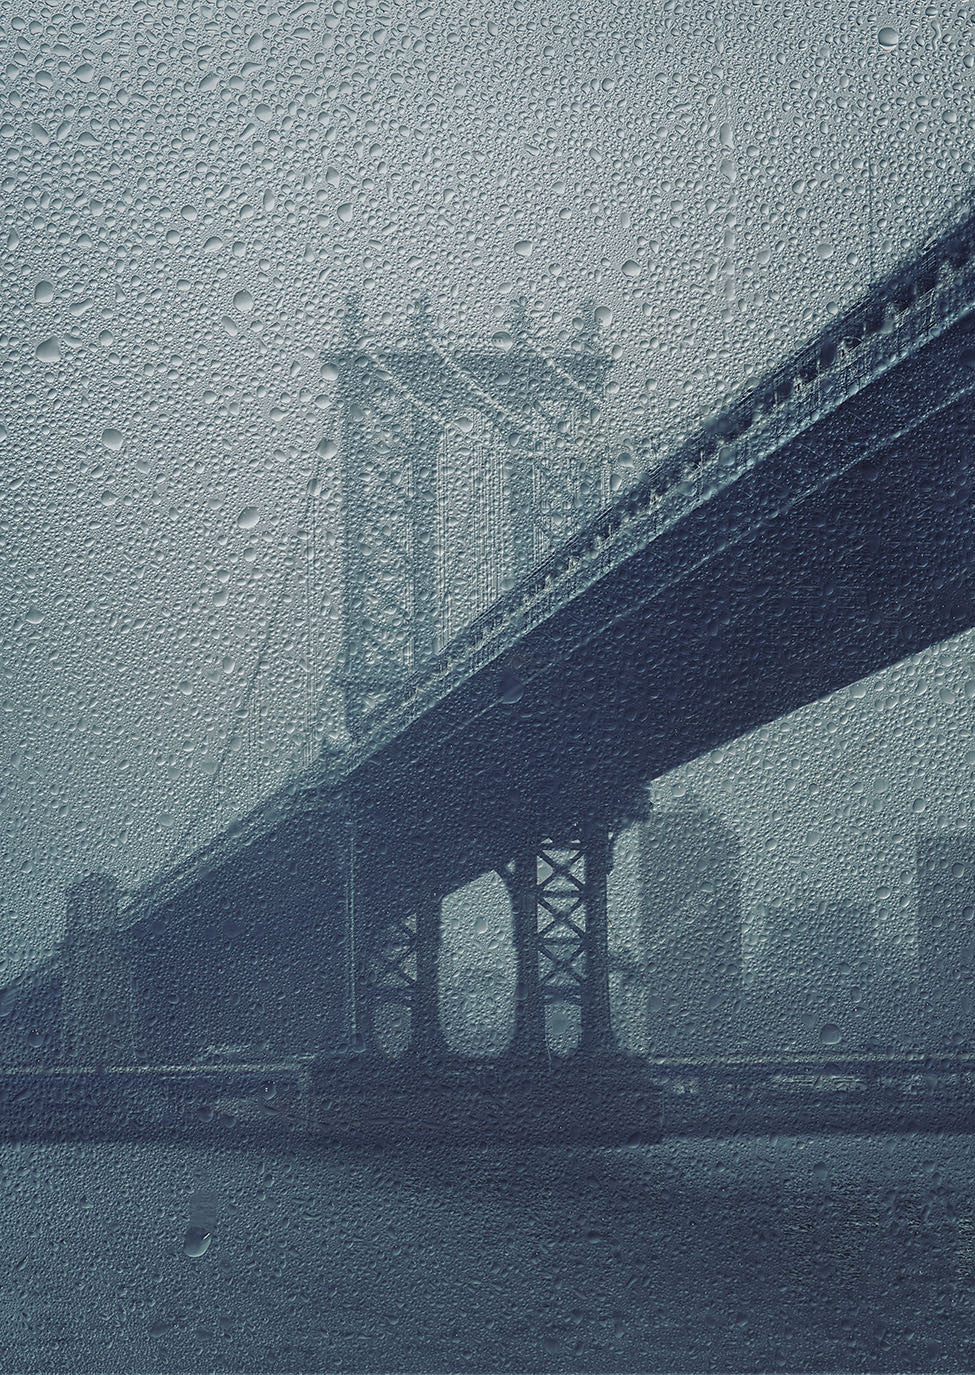 New York Through the Rain